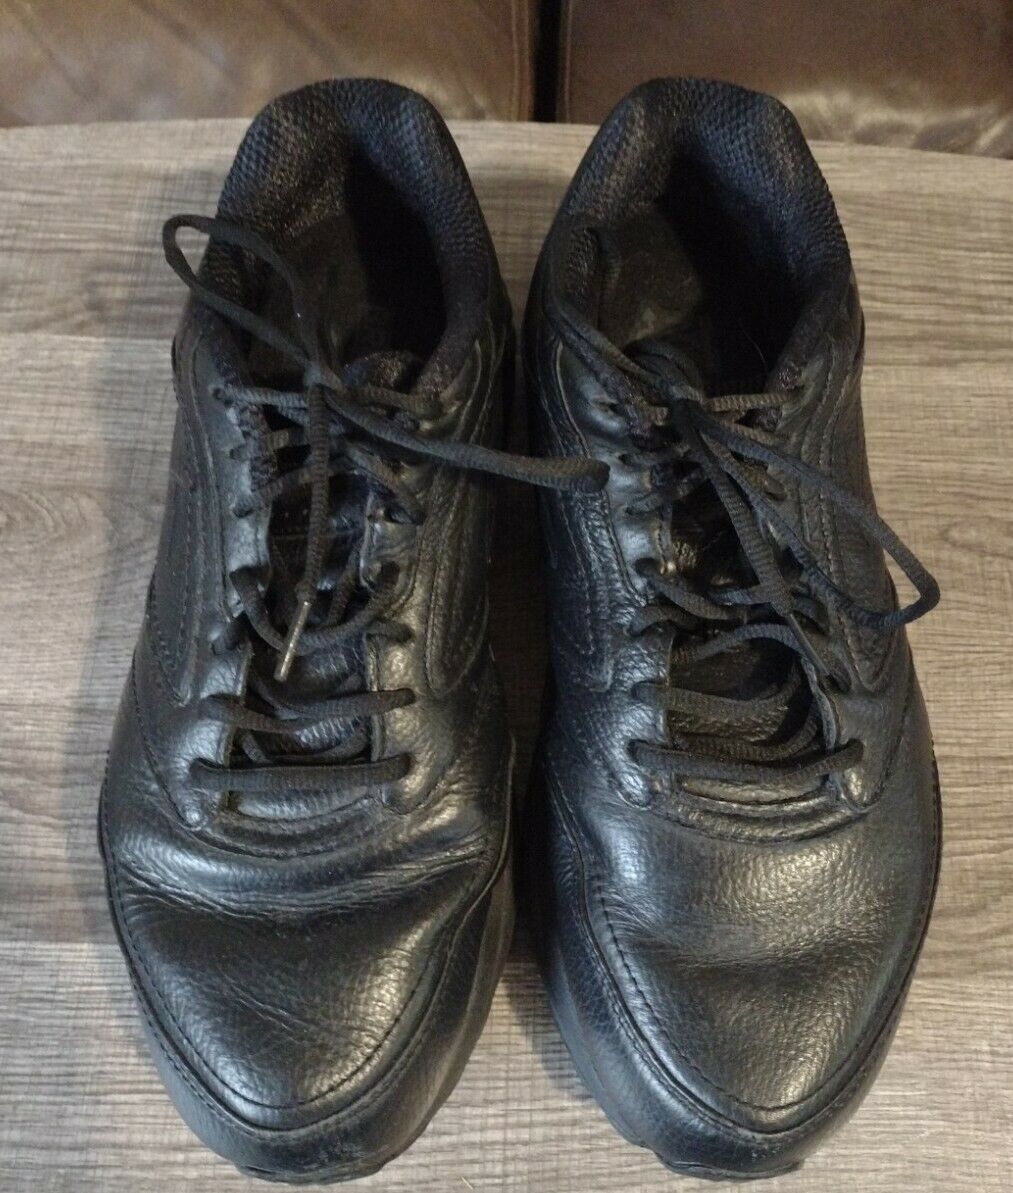 Brooks Addiction Walker Black Leather Walking Shoes Men's 12.5 2E Wide